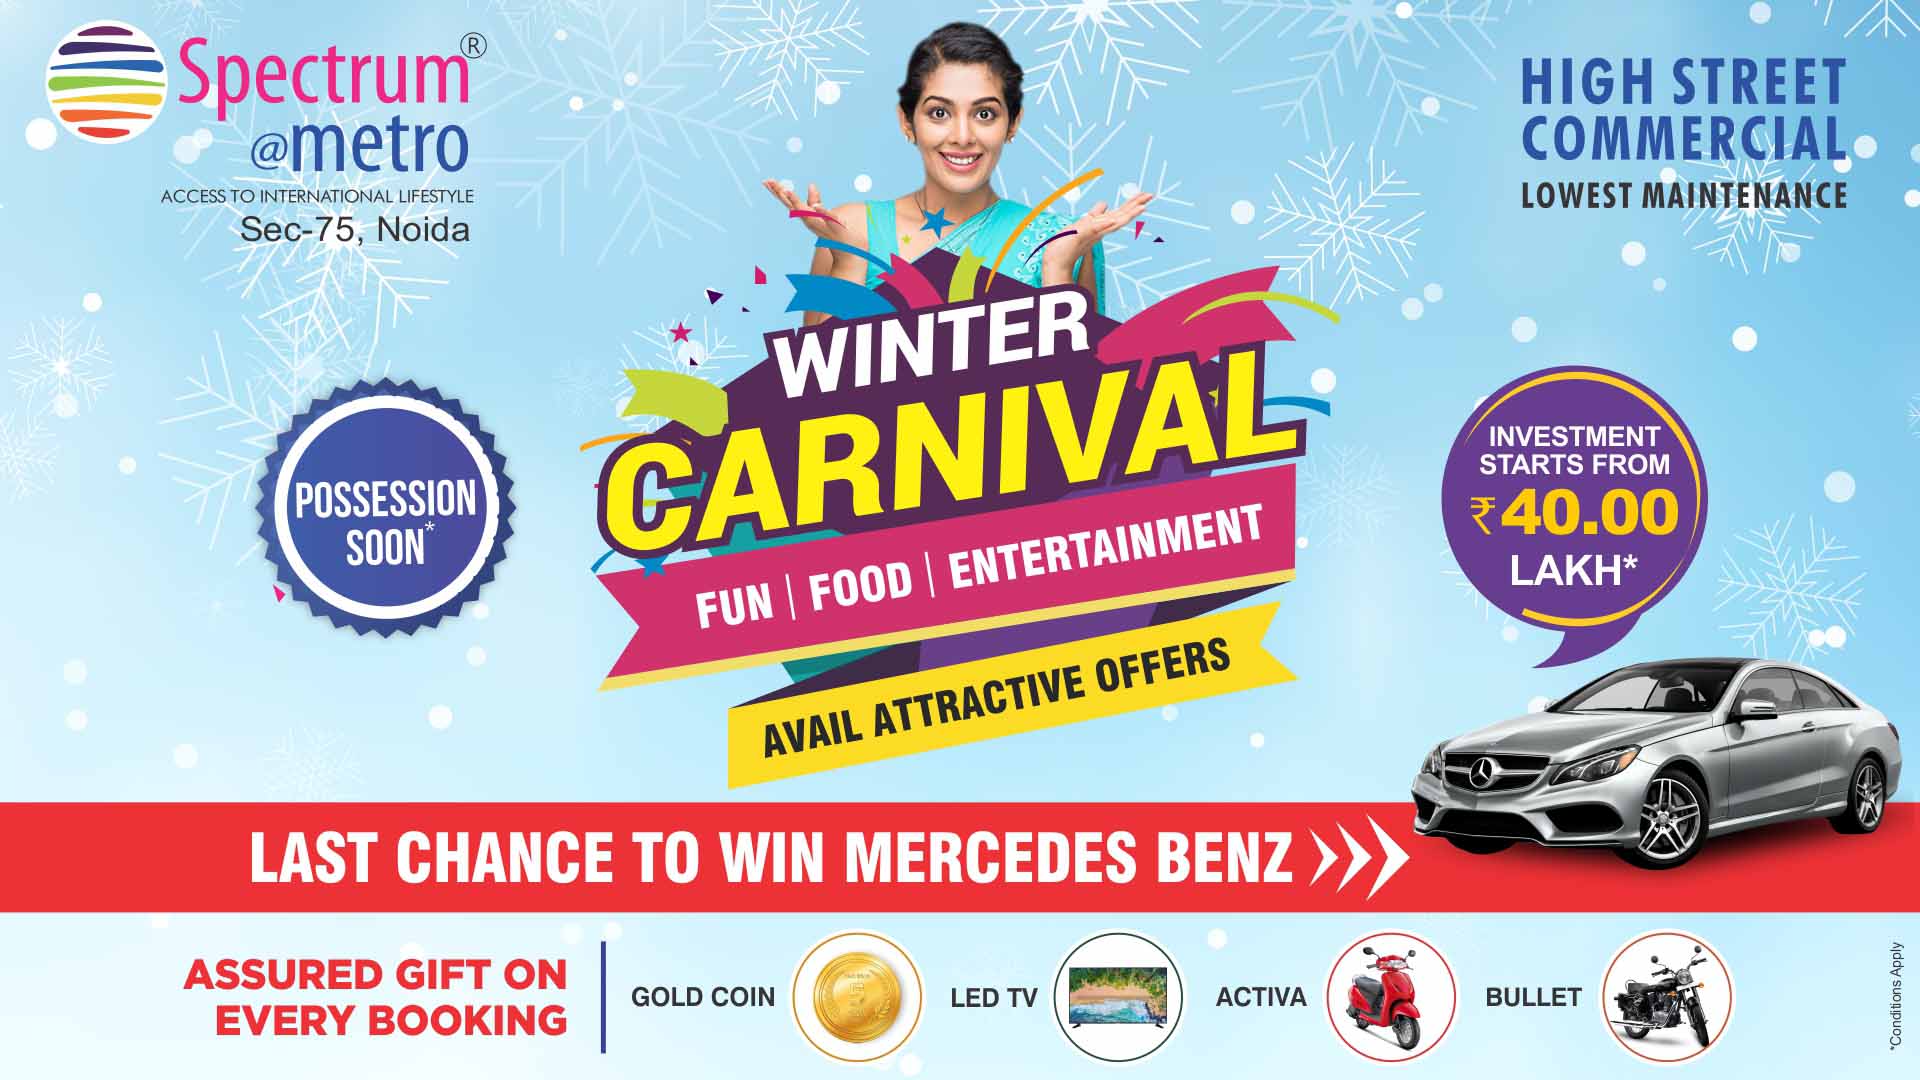 spectrum metro winter carnival offers